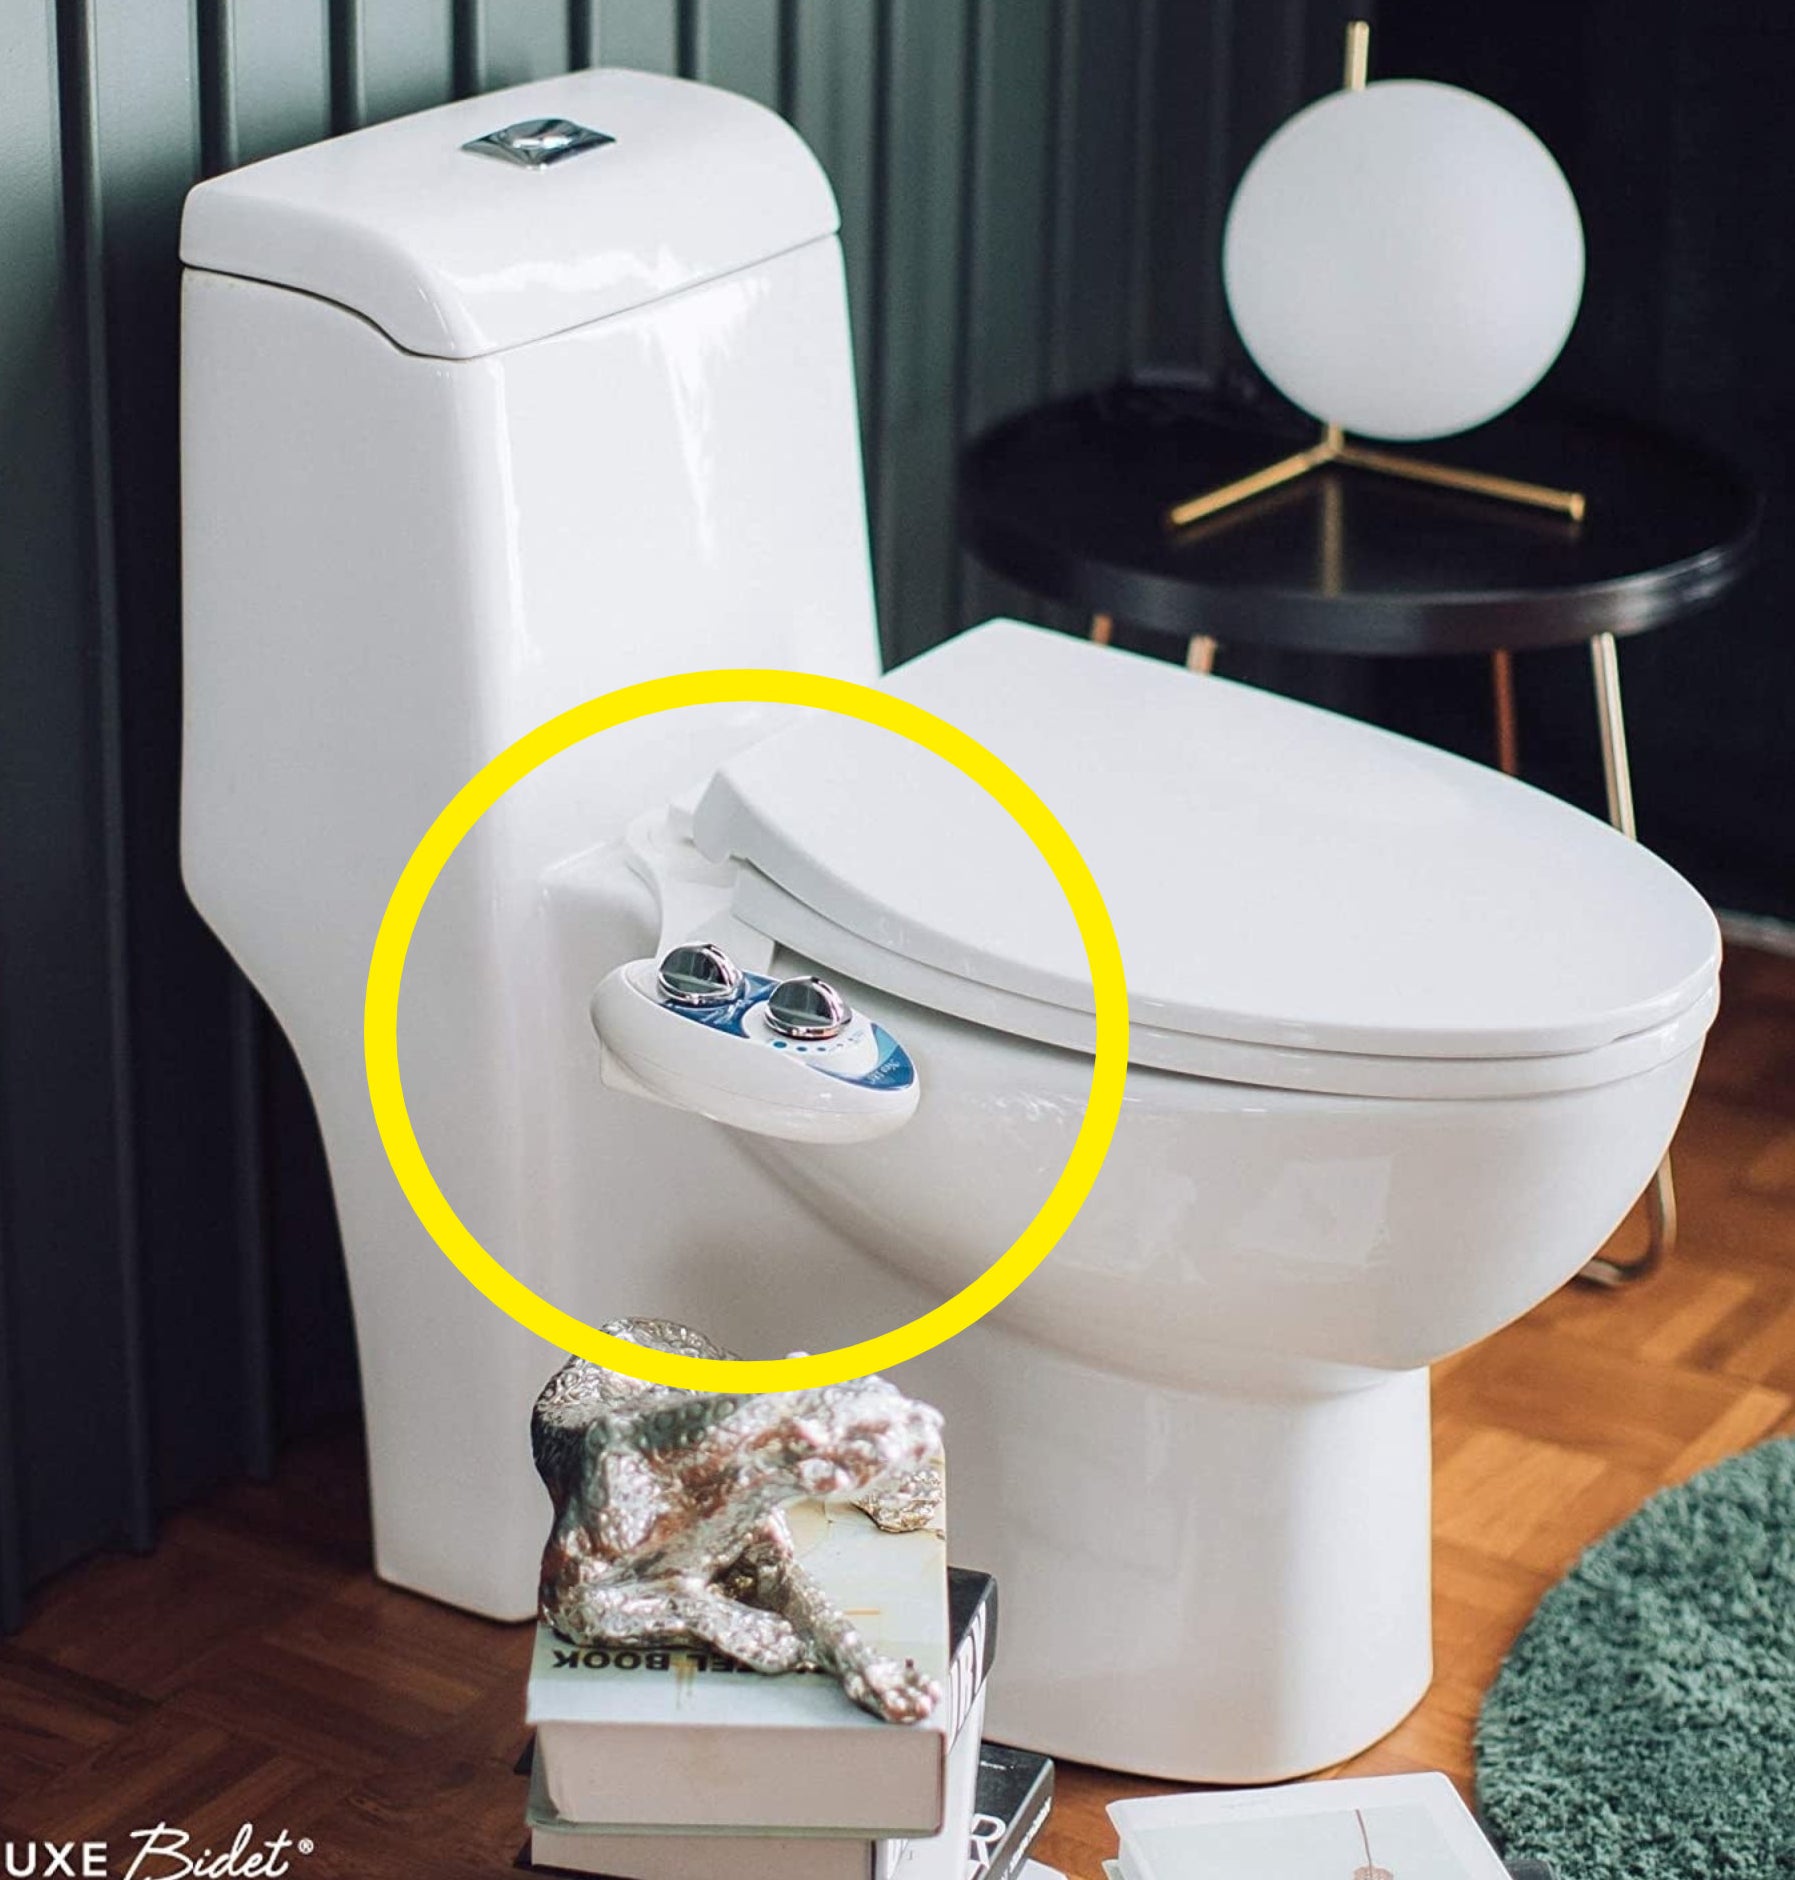 The bidet attachement on a toilet